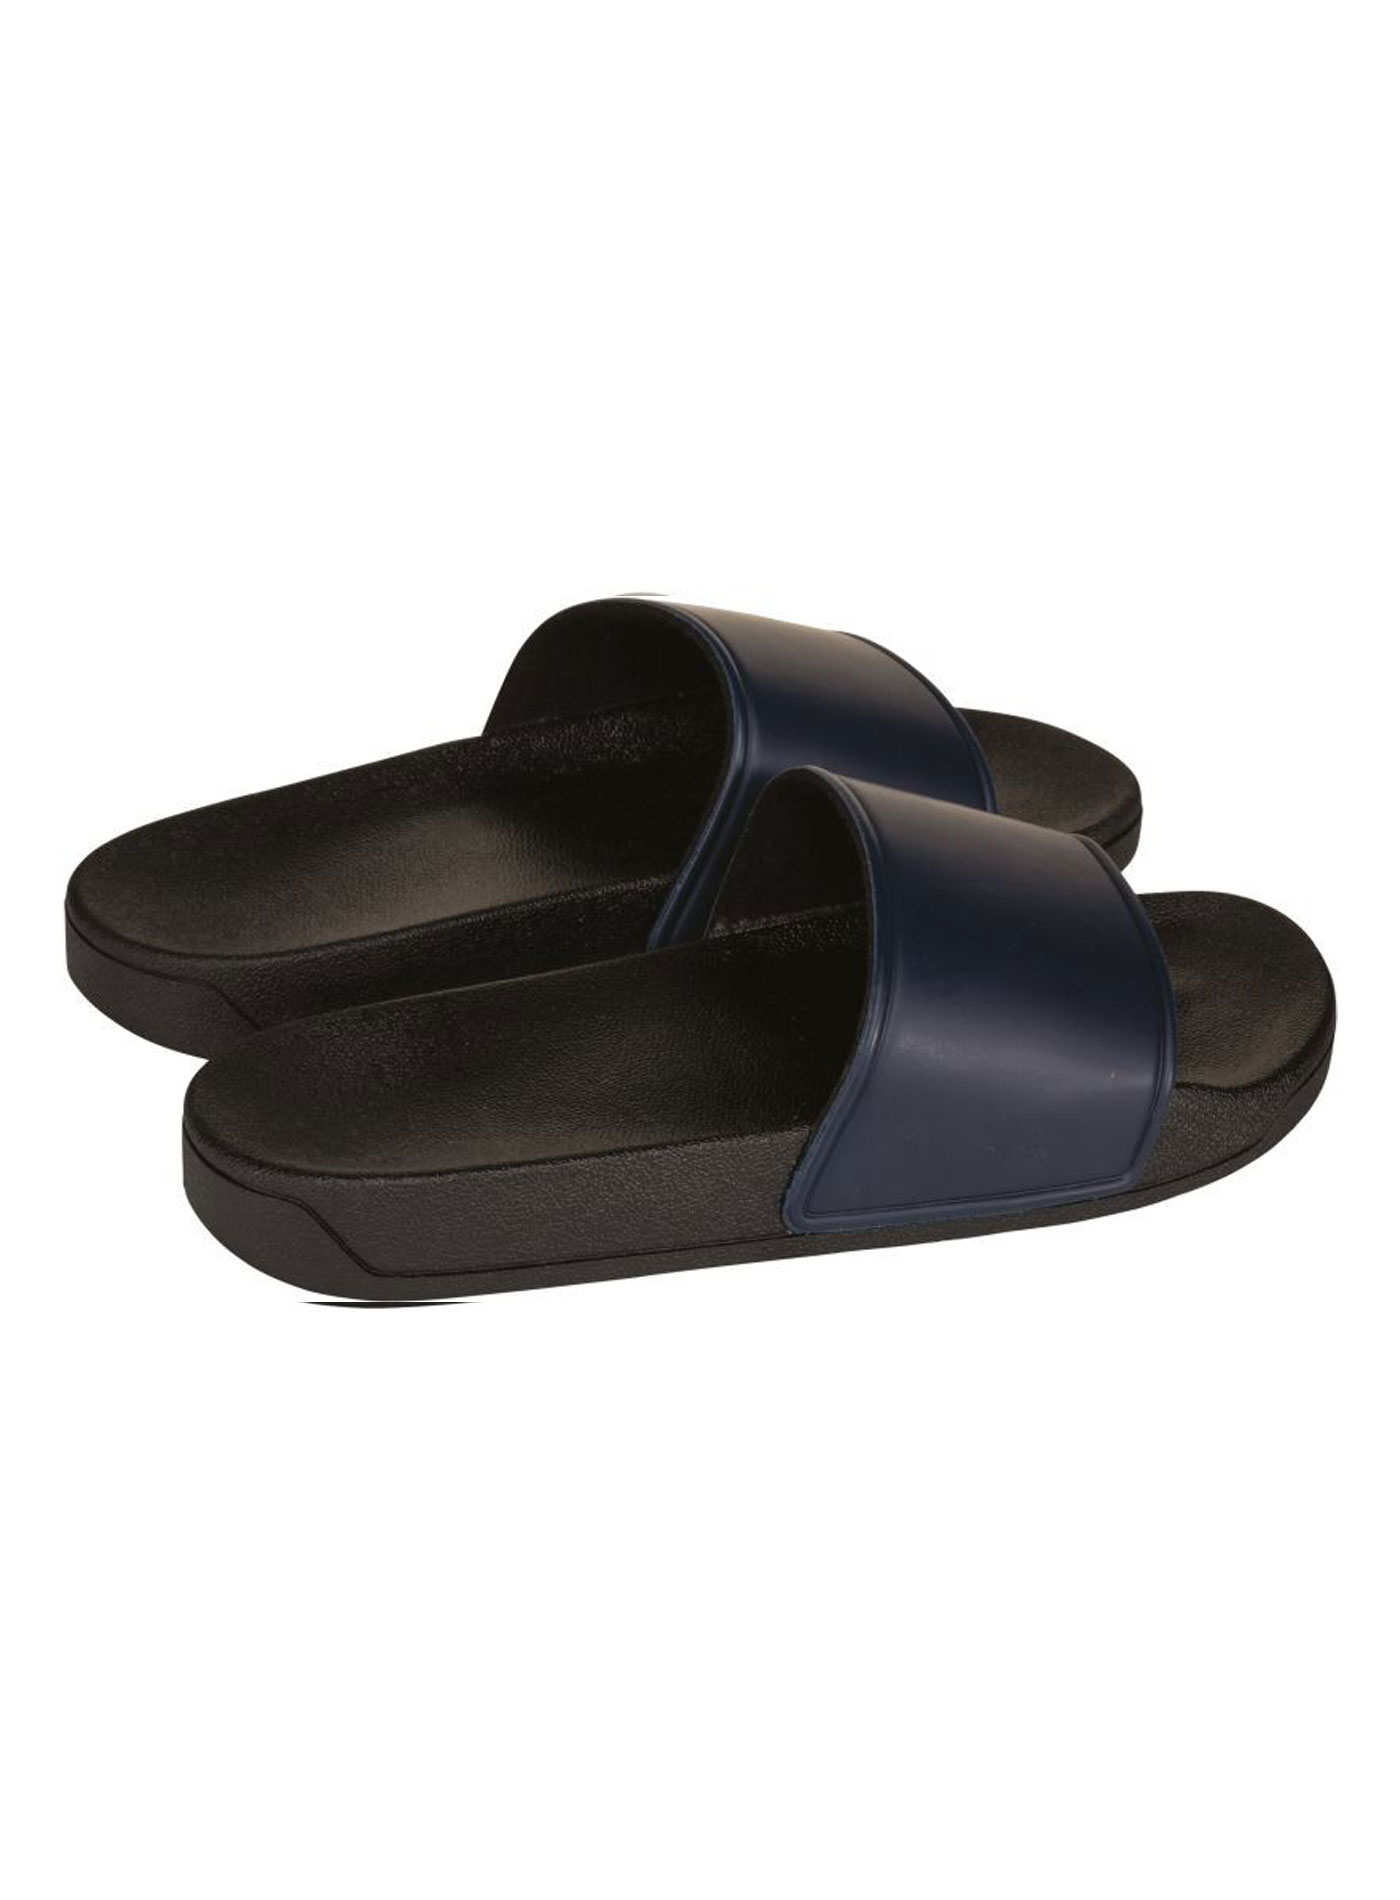 Pantofle Proact - Modrá s černou 40